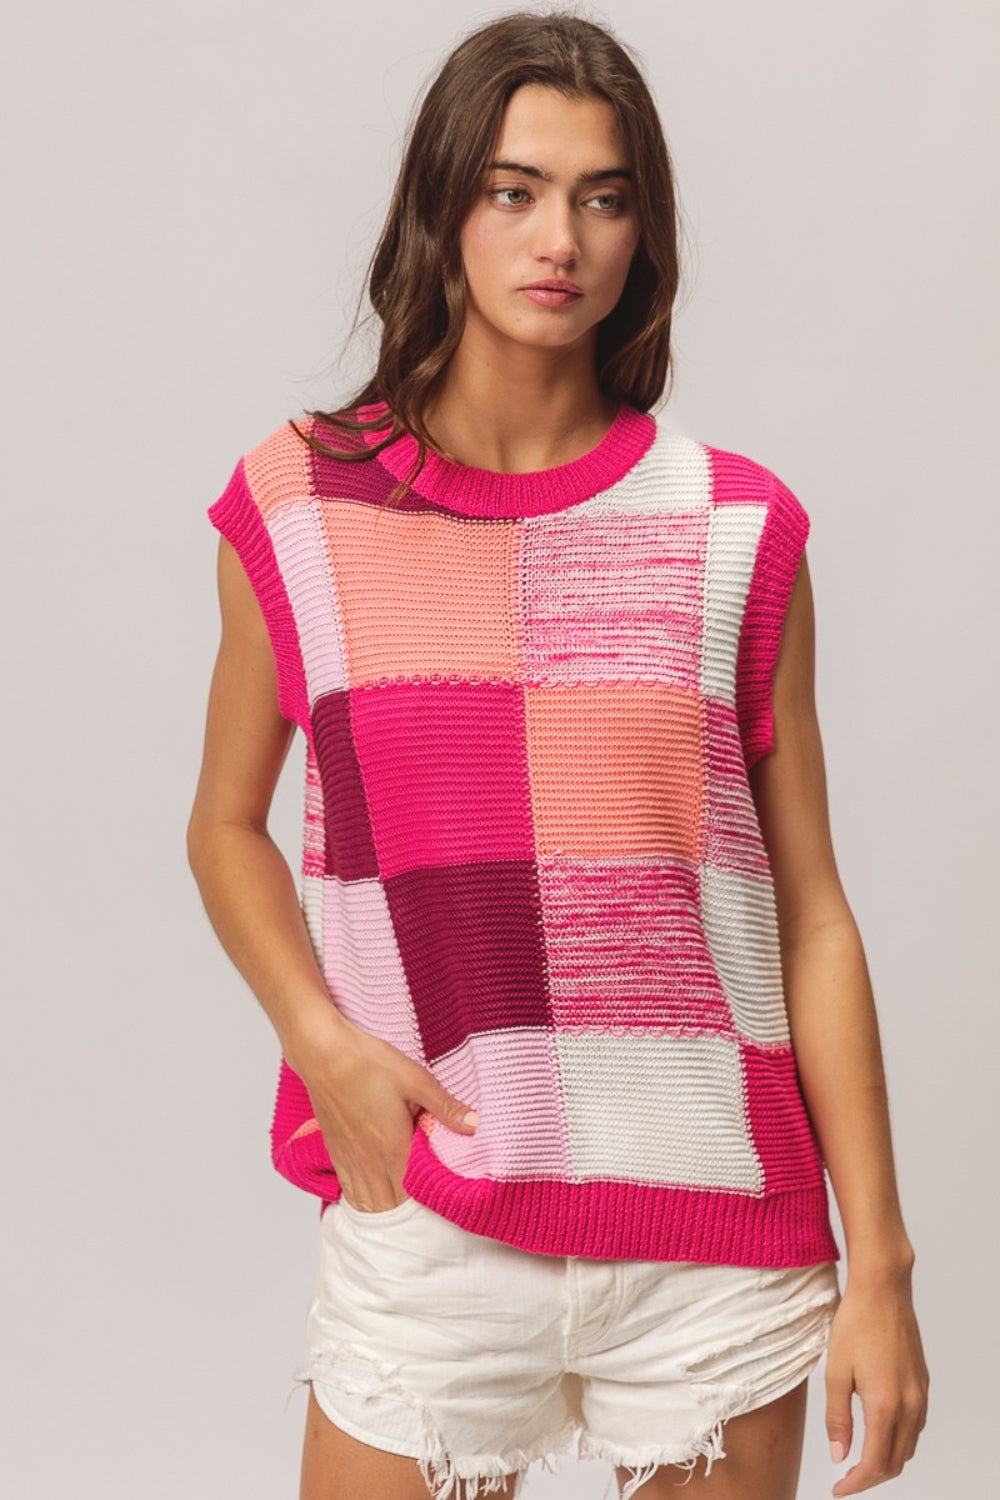 Patriotic Colorblock Sweater Vest for Women